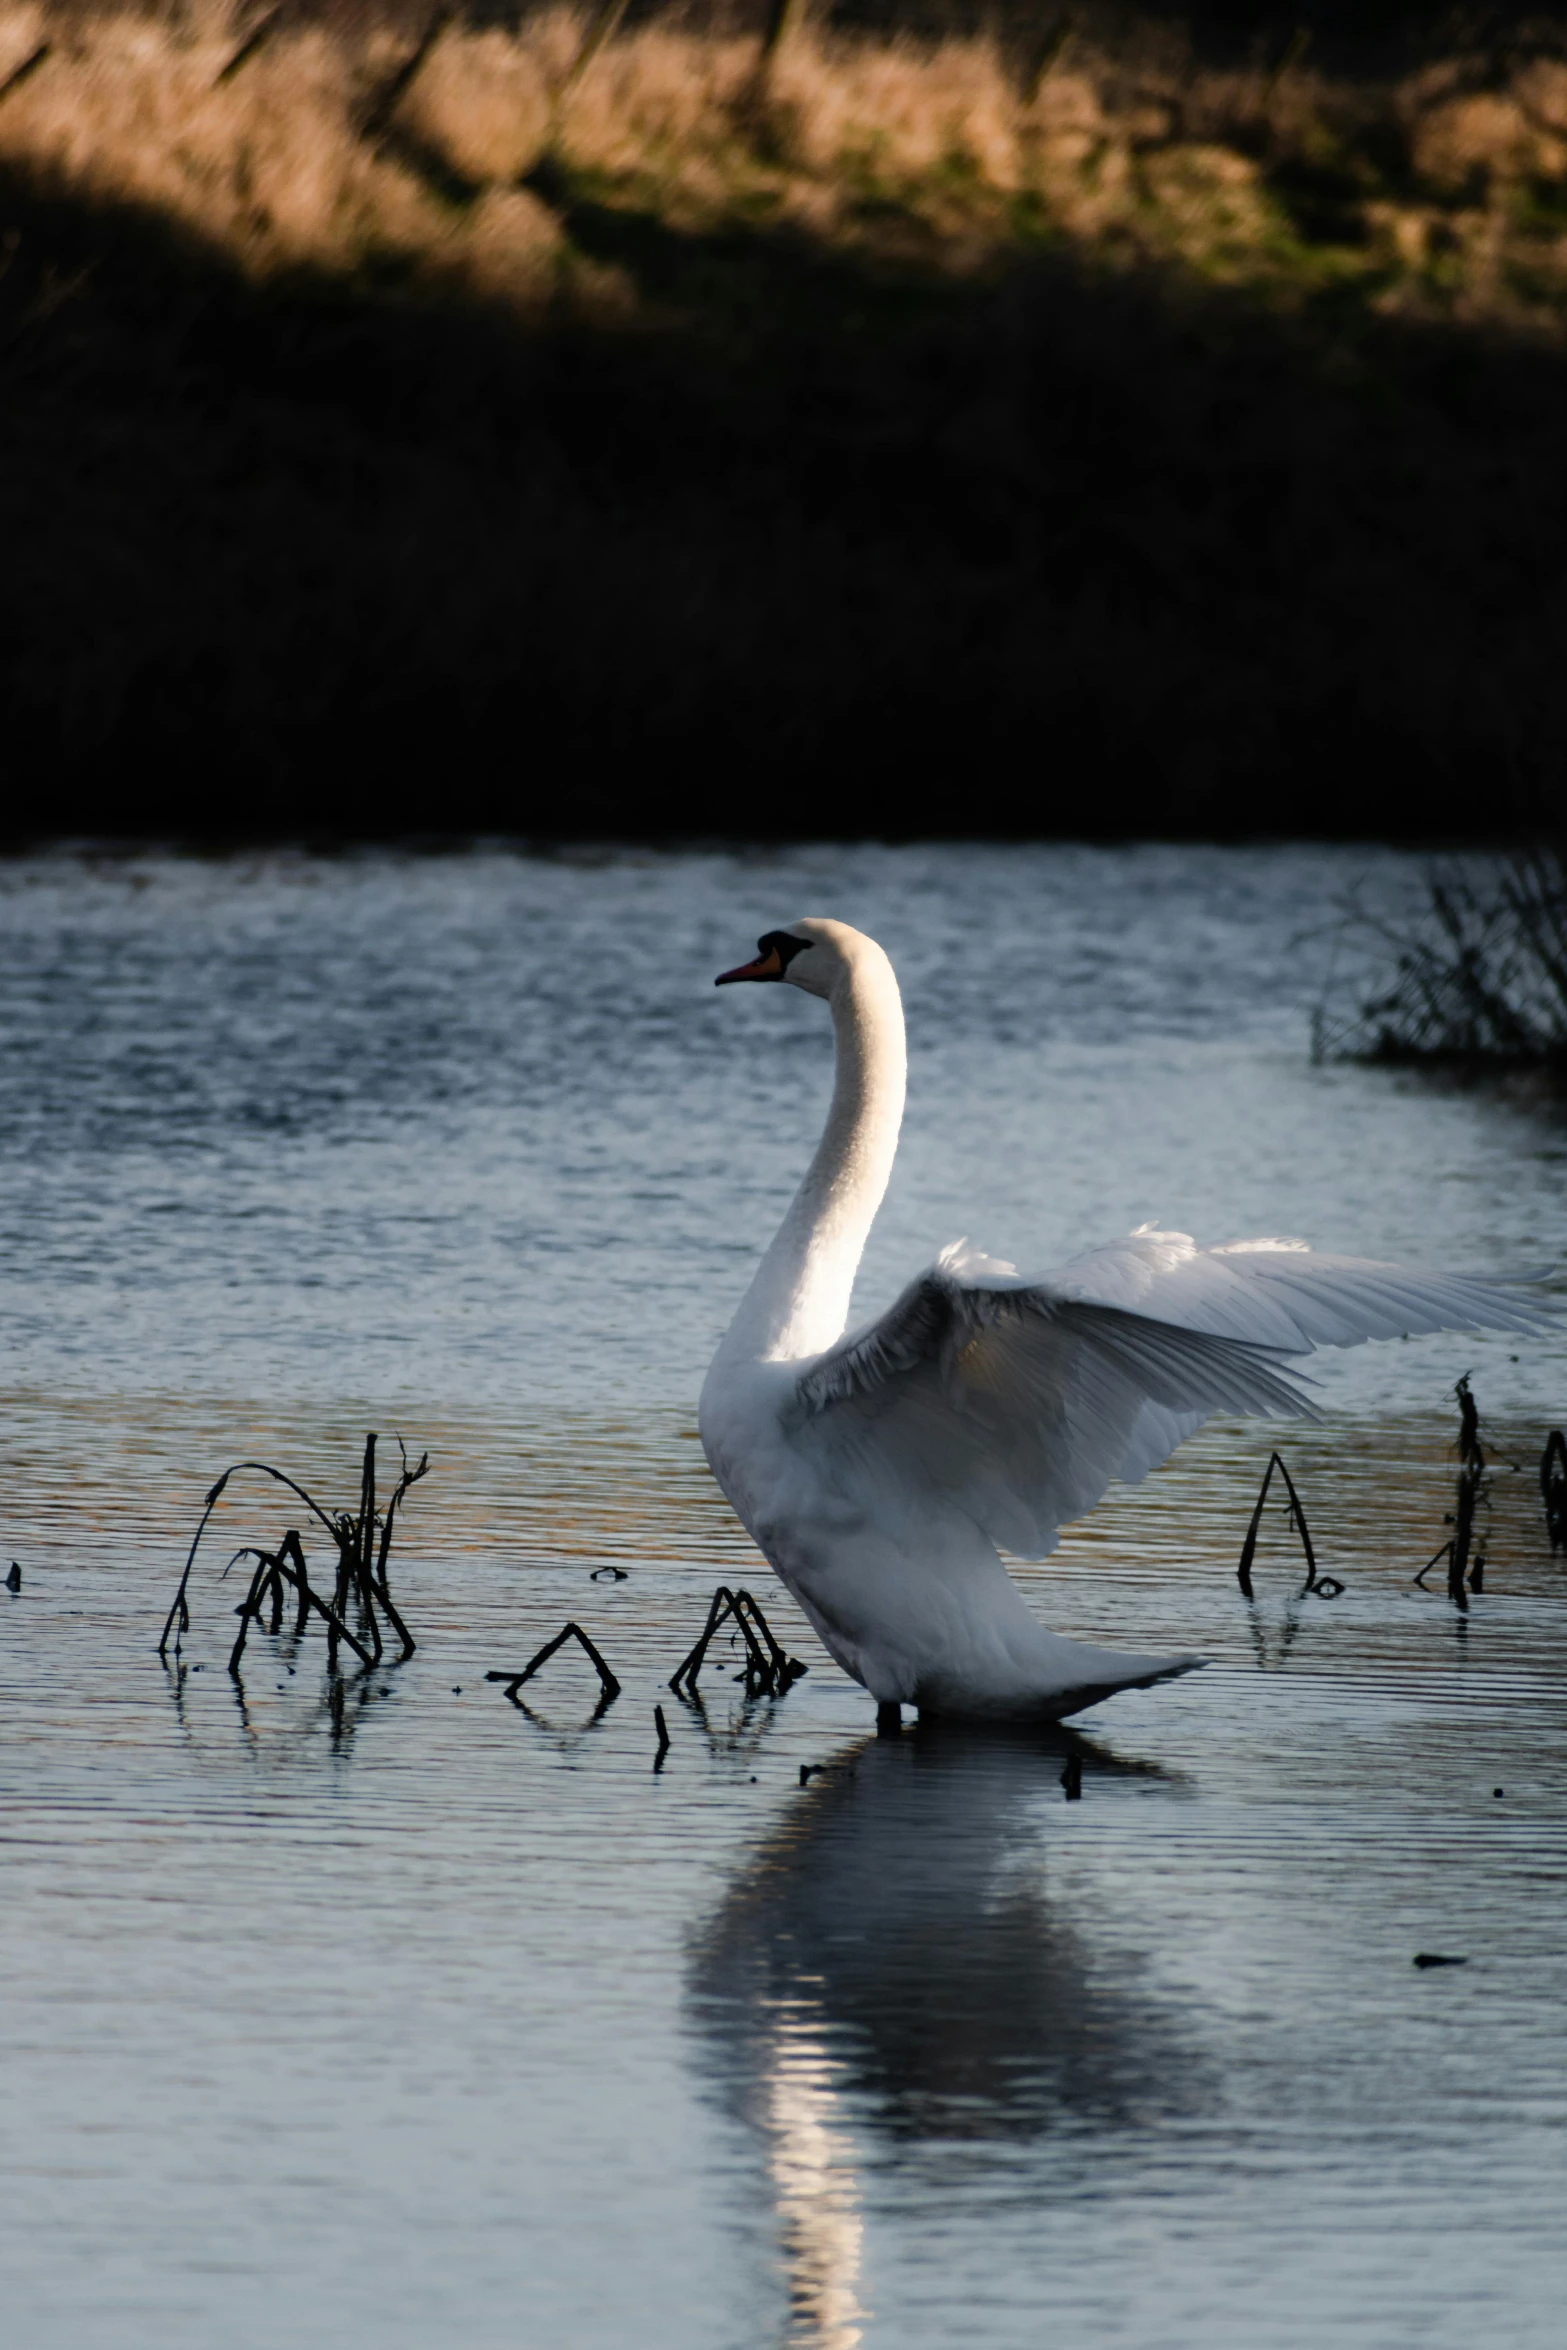 a white swan walking along side the water